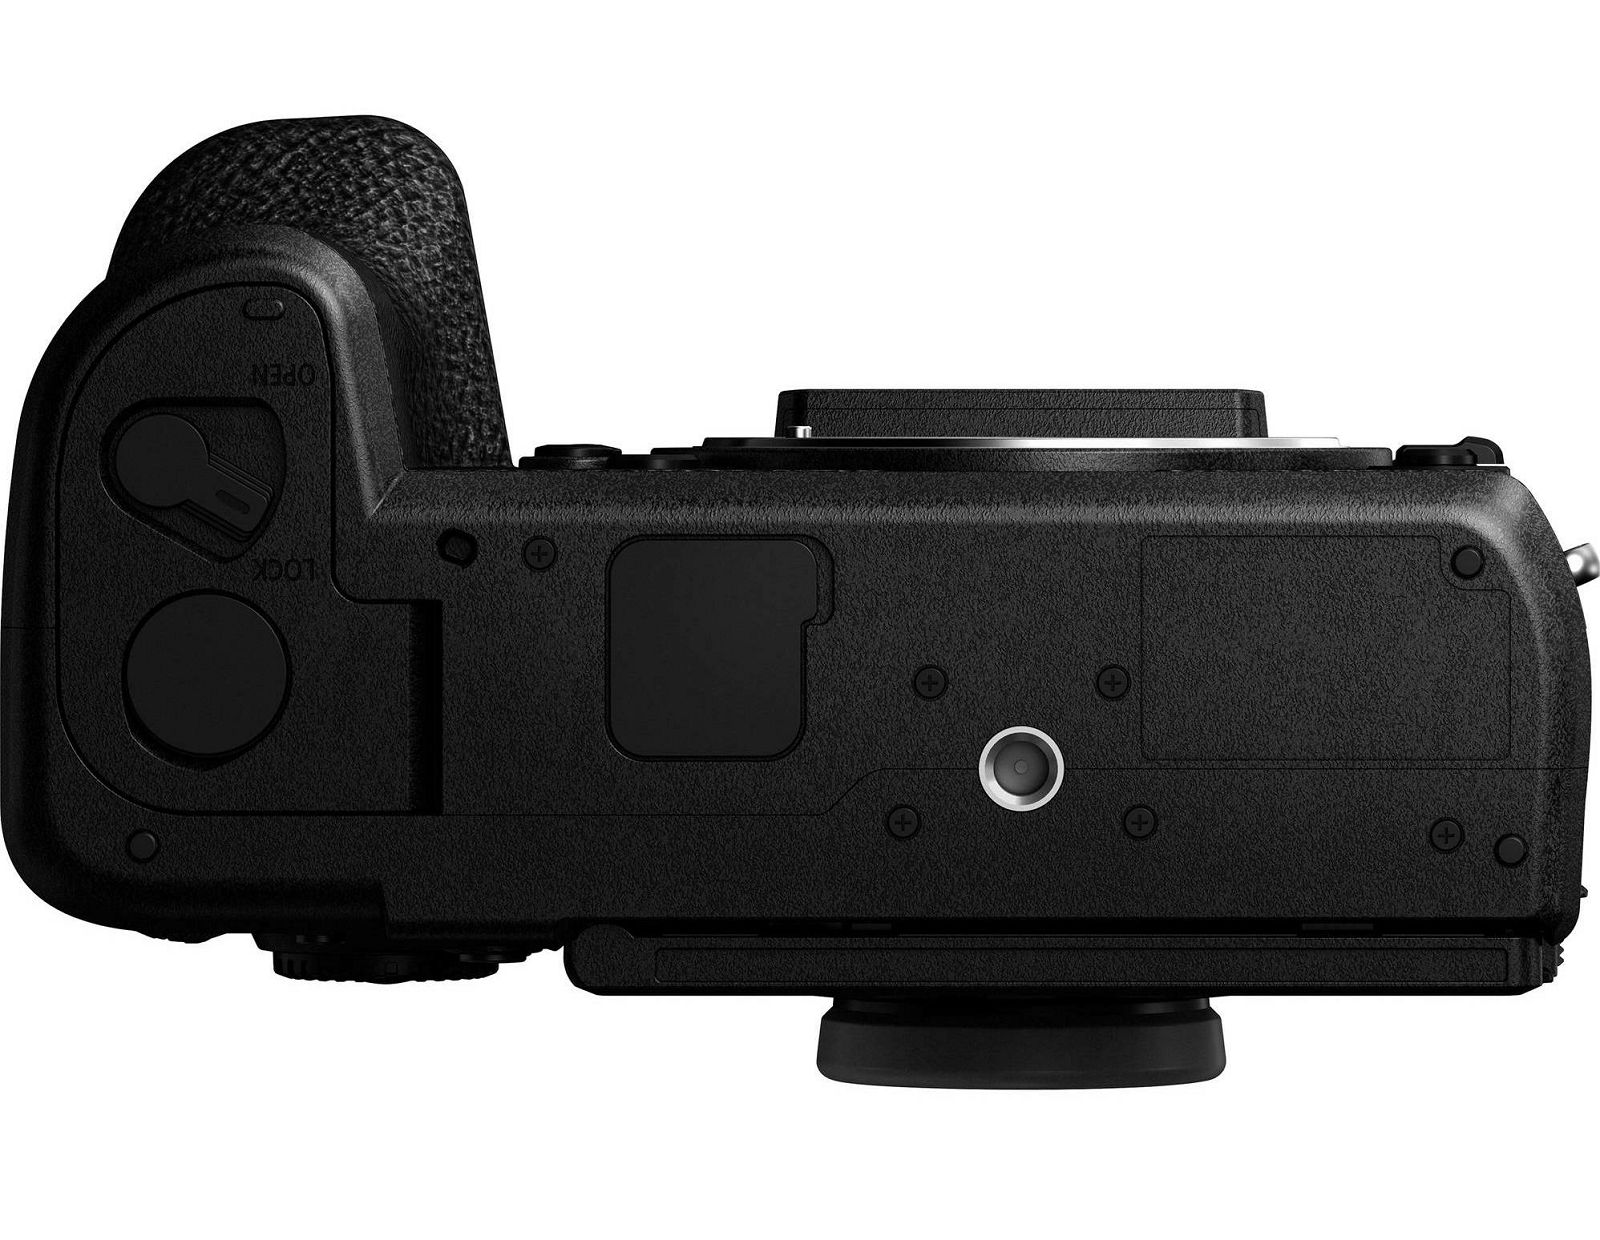 Panasonic Lumix S1 Body 4K Mirrorless bezrcalni digitalni fotoaparat tijelo DC-S1 Full Frame Digital Camera (DC-S1E-K)